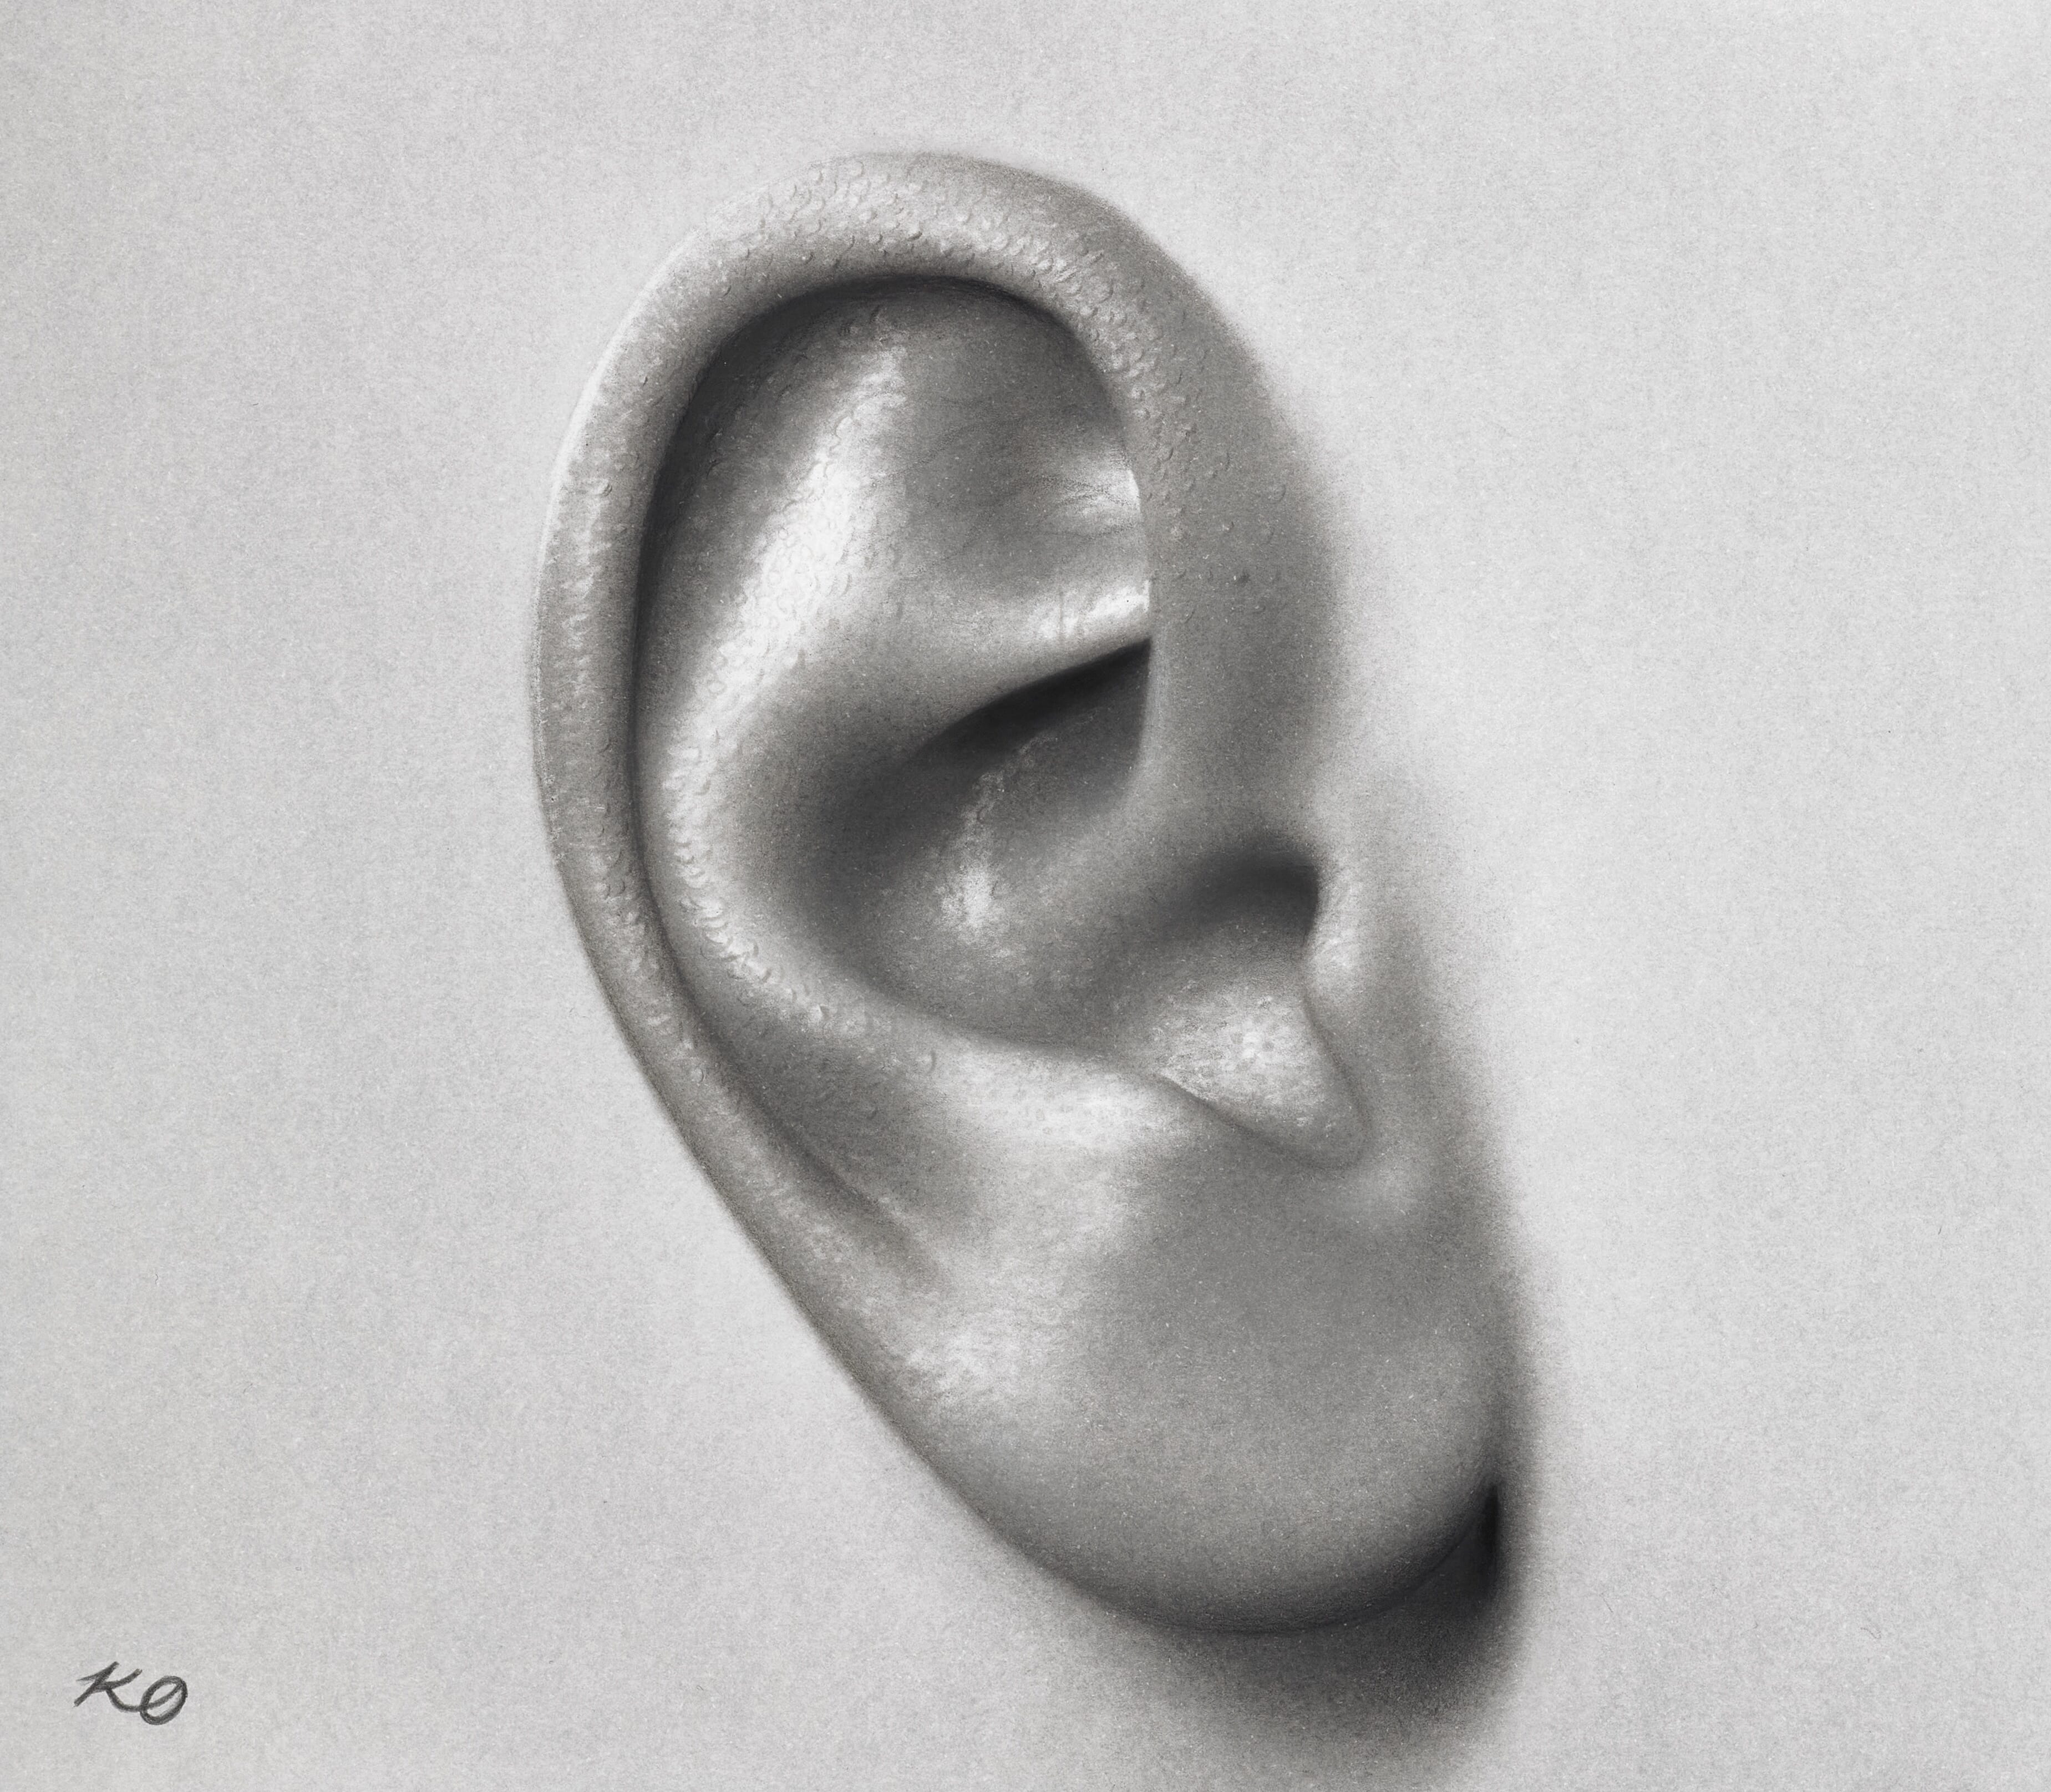  Ear Study